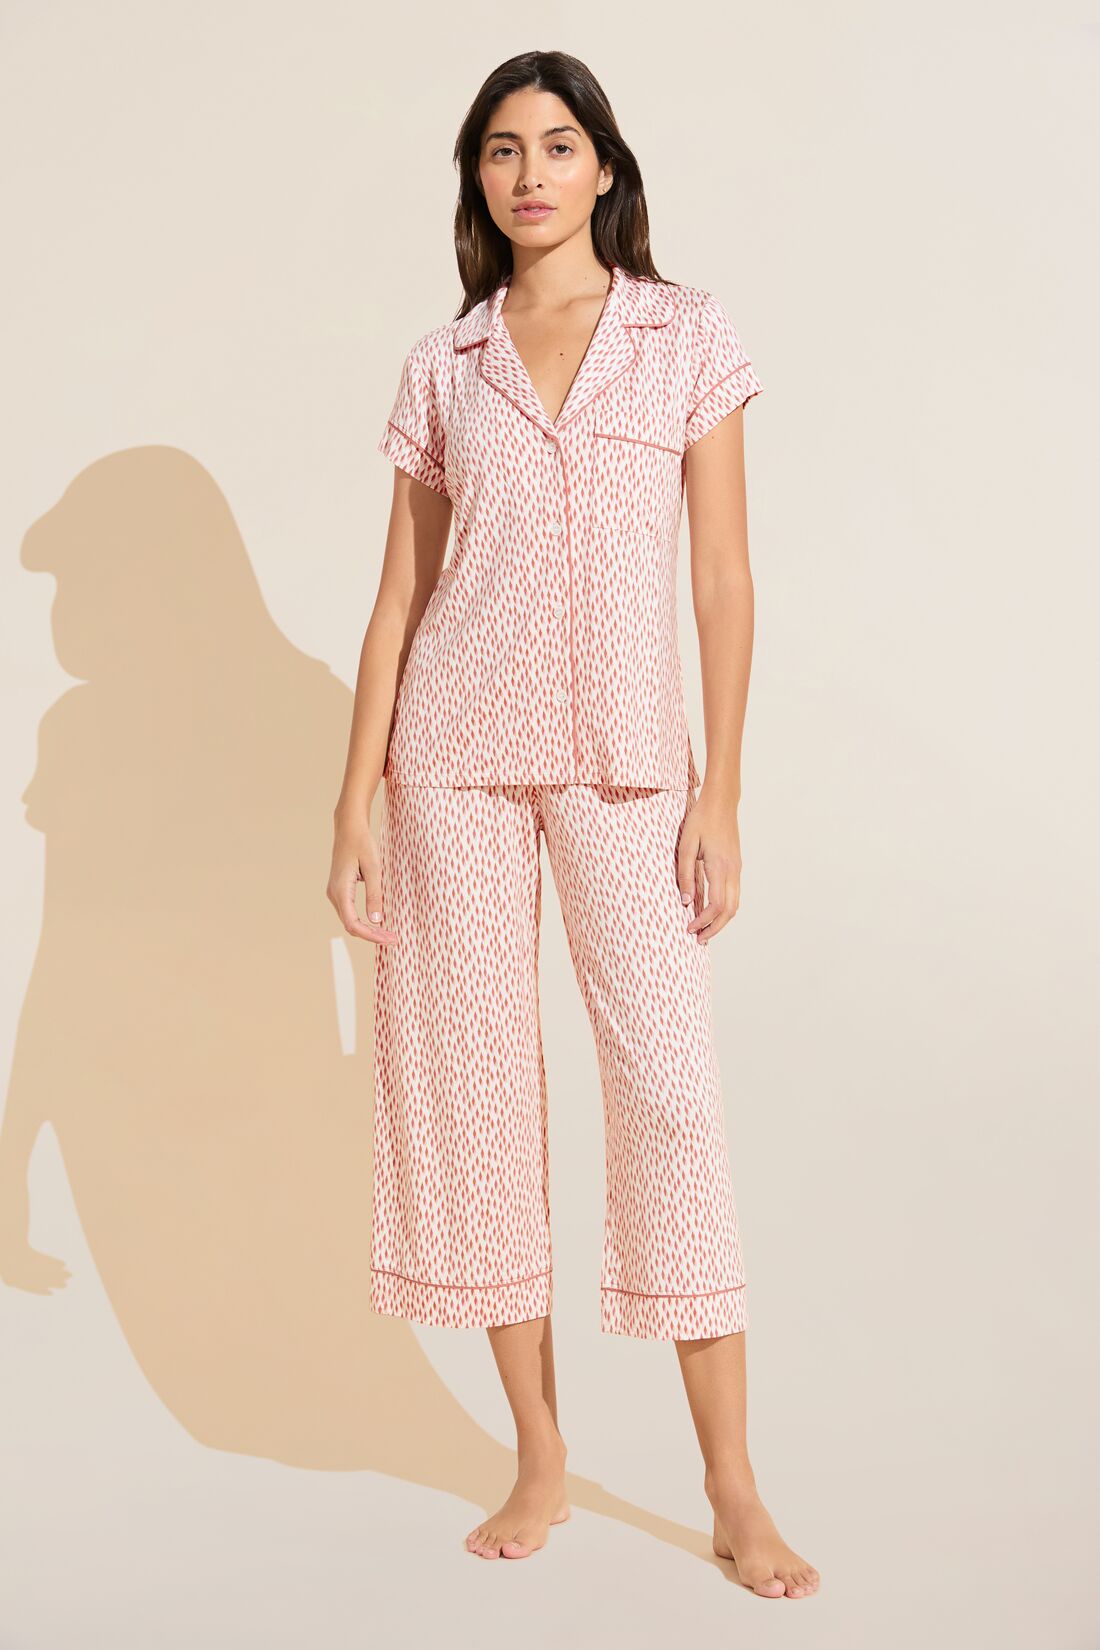 Eberjey Gisele Cami & Pants Pajama Set